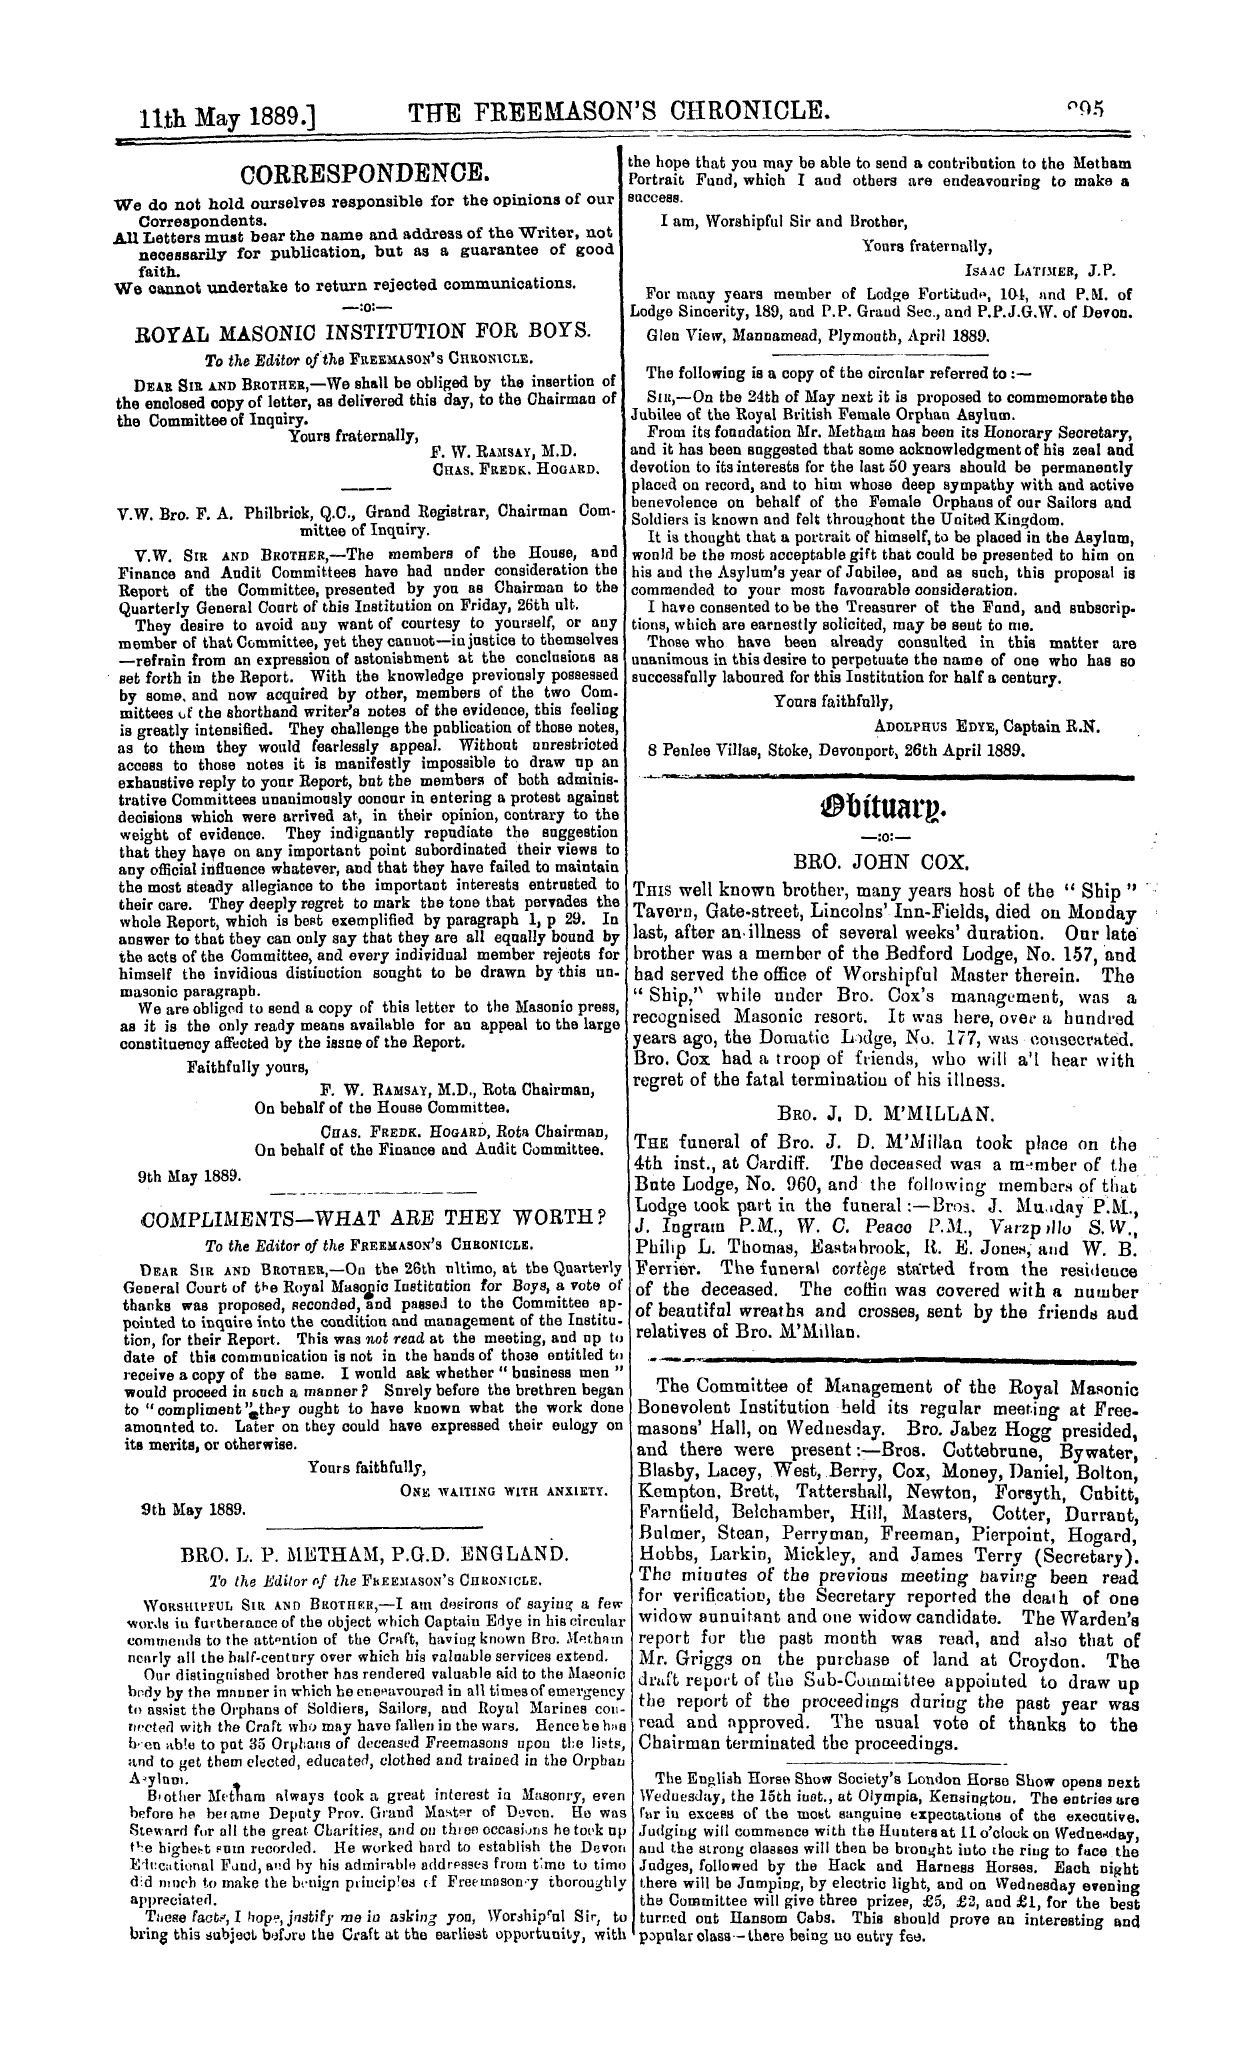 The Freemason's Chronicle: 1889-05-11 - Correspondence.